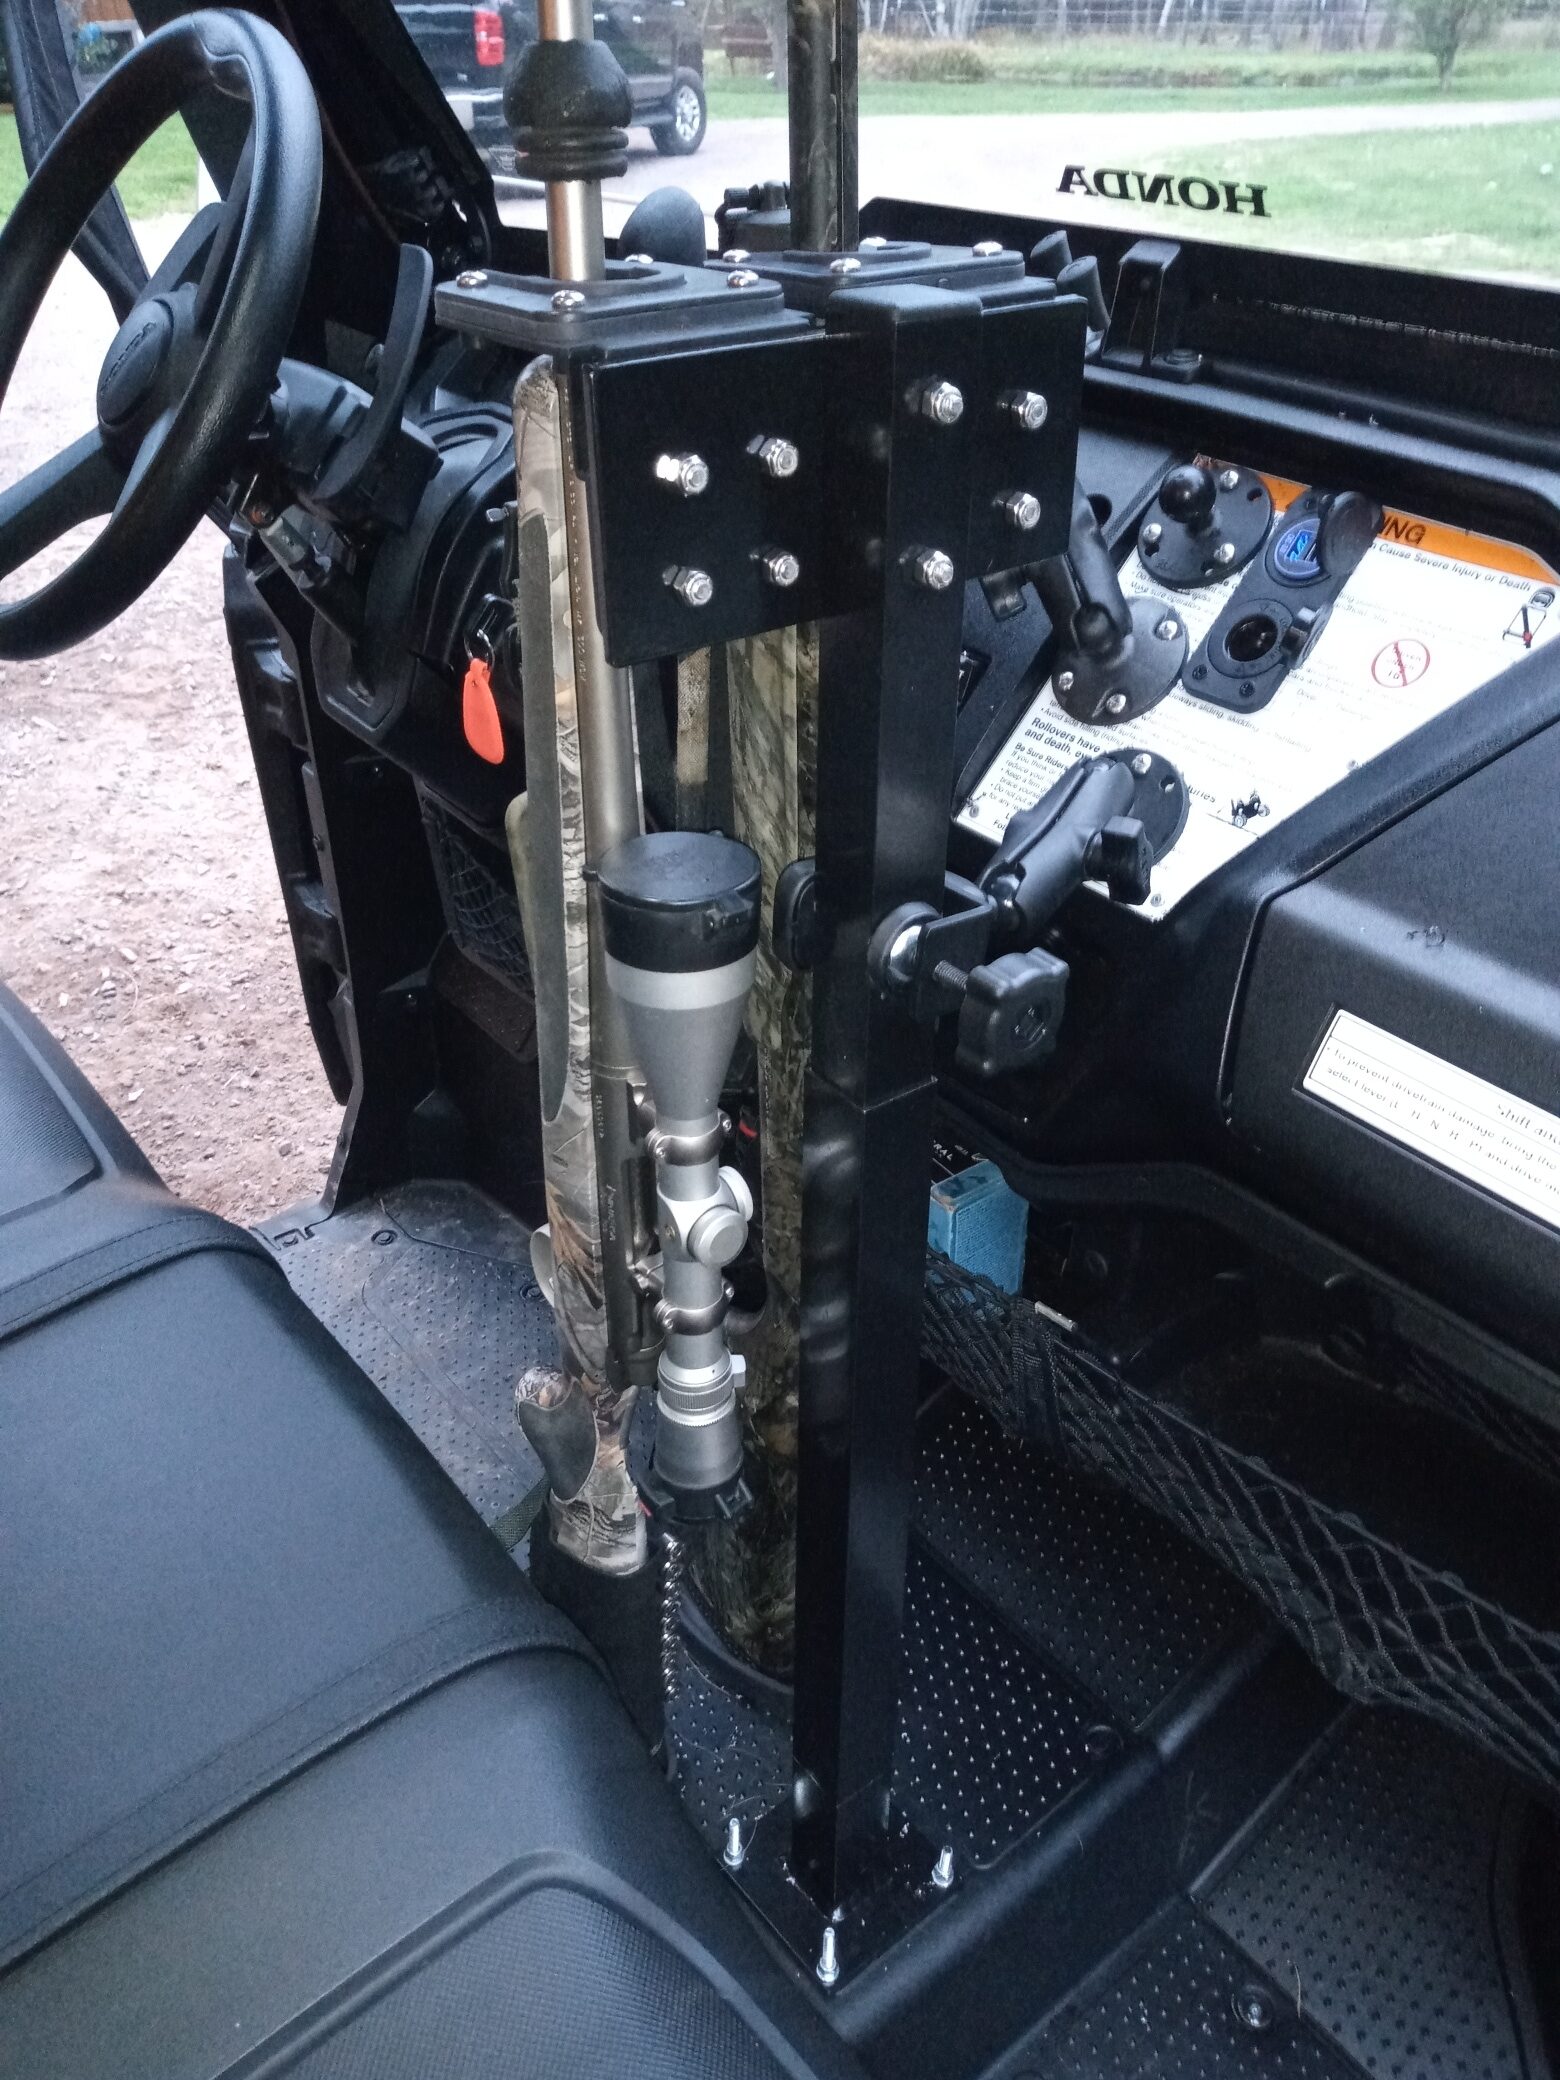 525UF Universal Floor Double Gun Rack Honda Pioneer-1000 ATV-UTV Side by Side